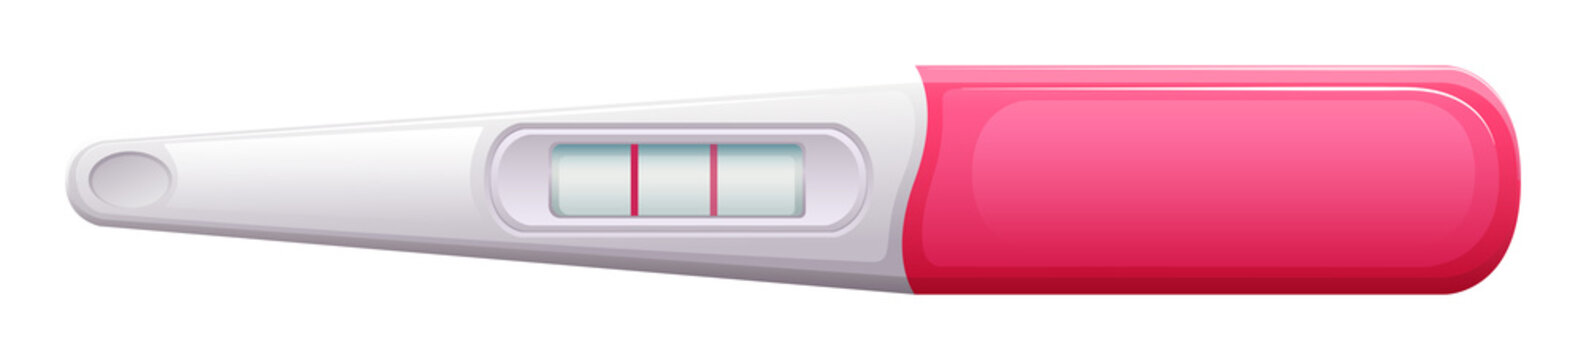 A pregnancy test